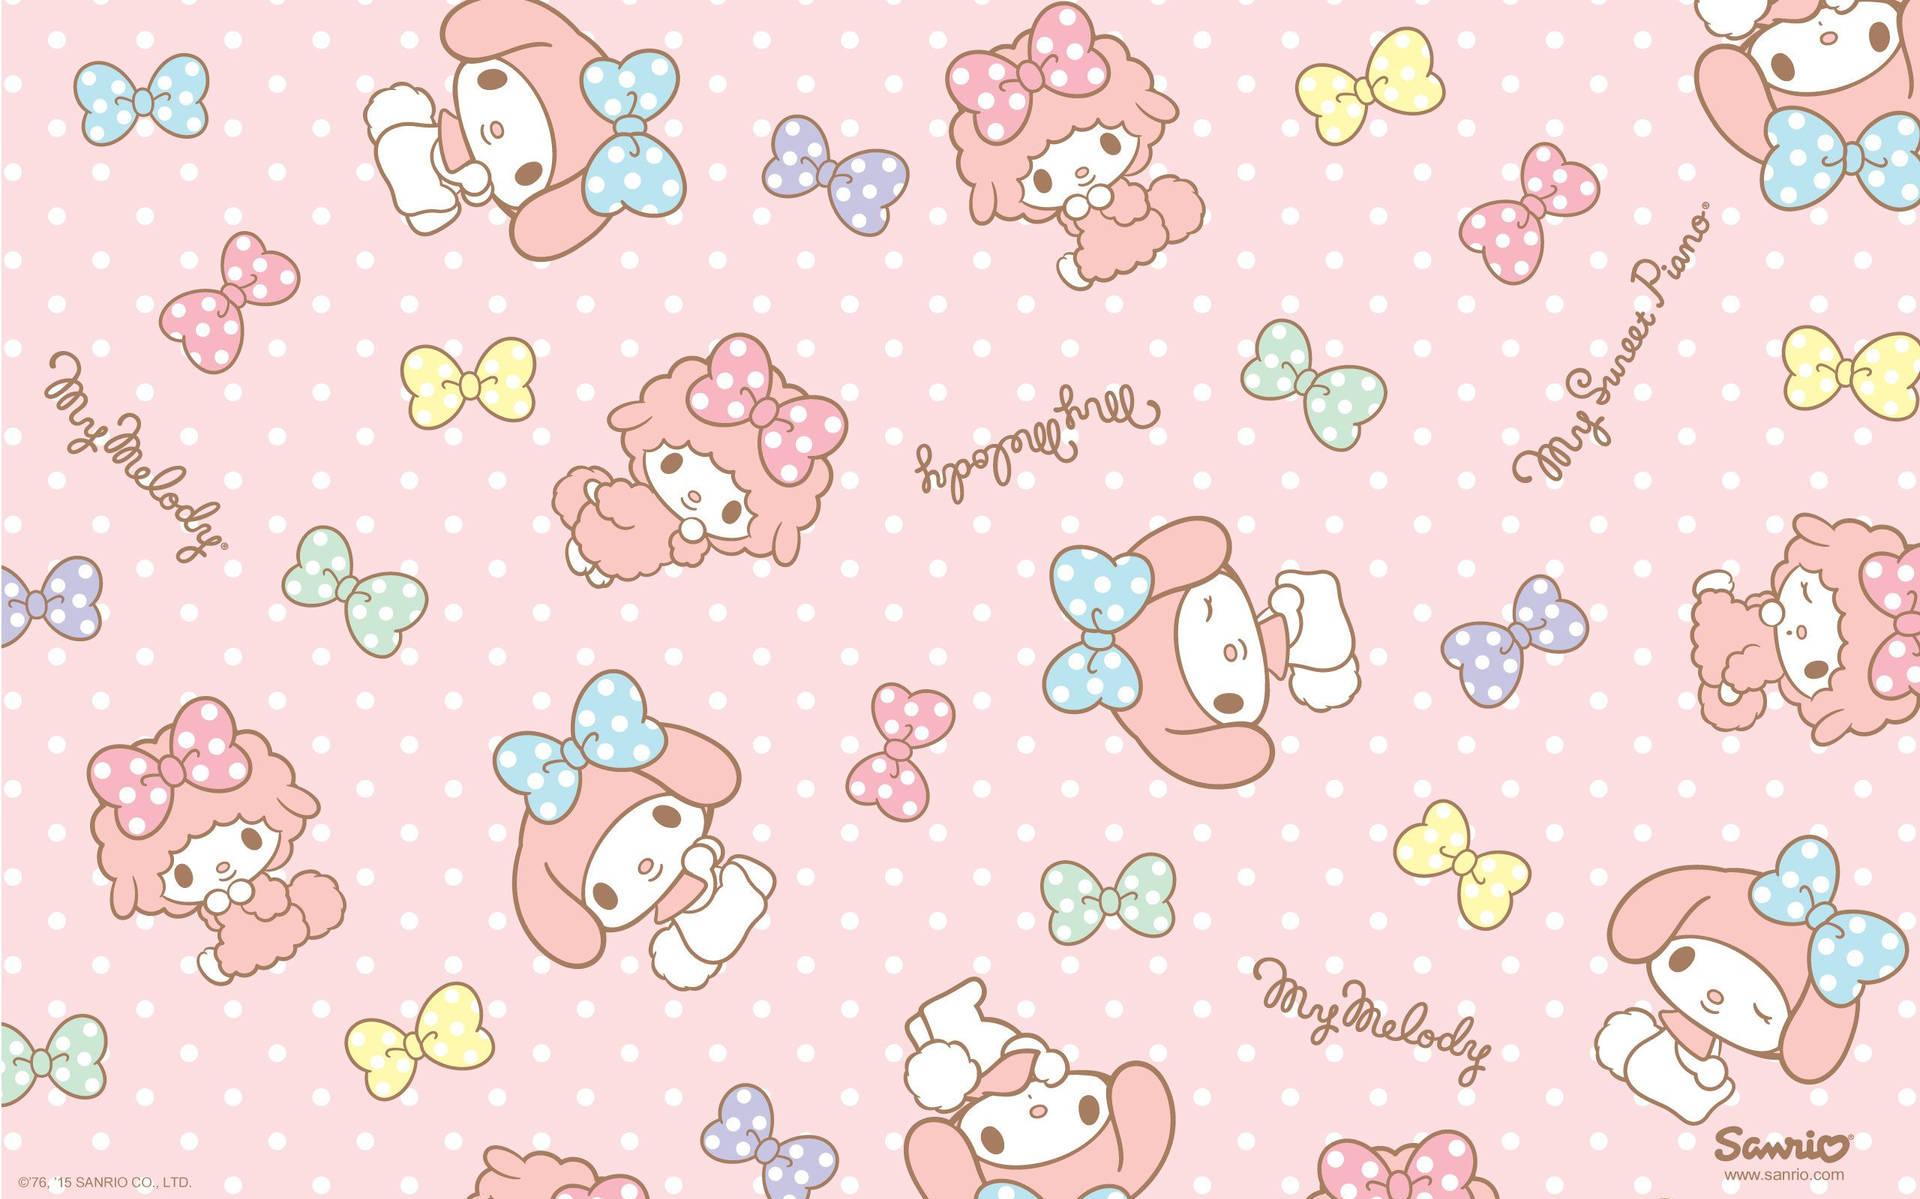 Cute Sanrio Wallpaper